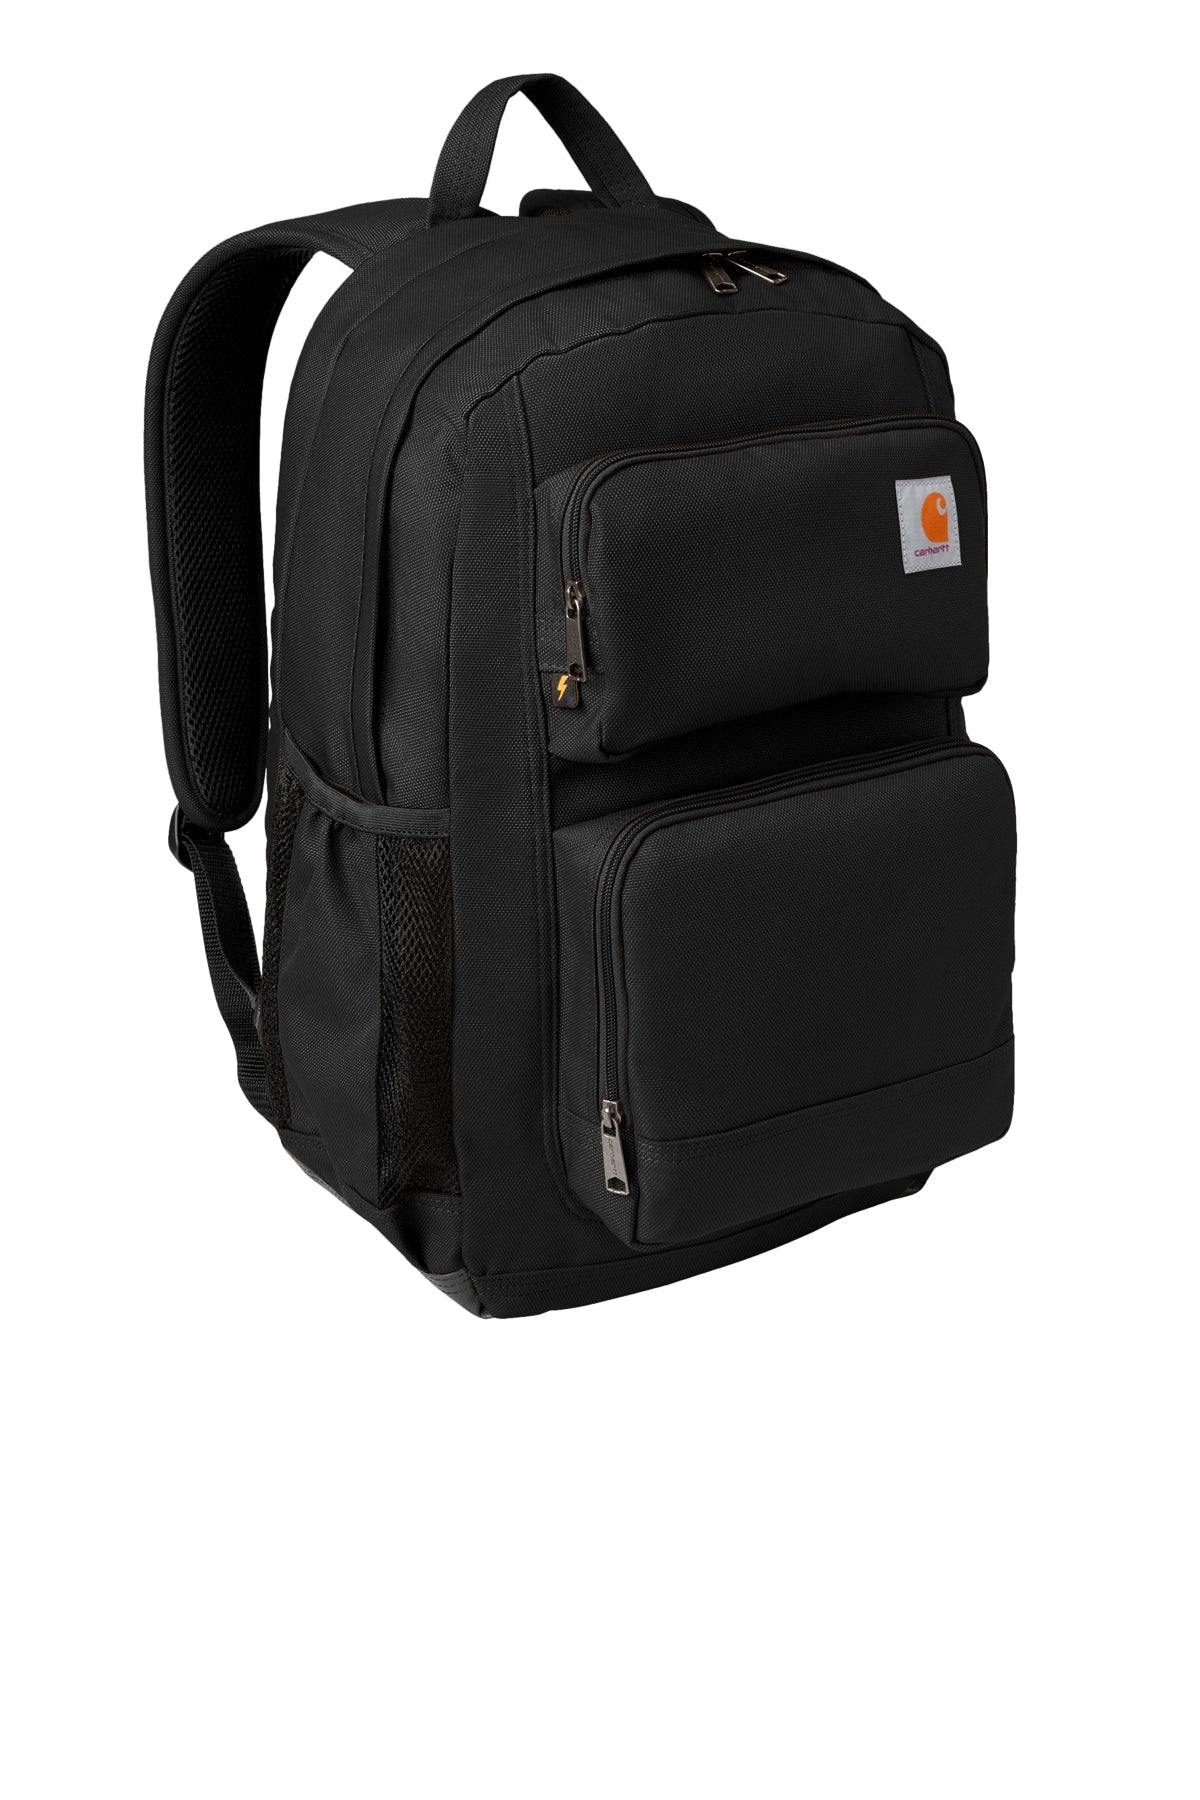 Carhartt 28L Foundry Series Custom Backpacks, Black